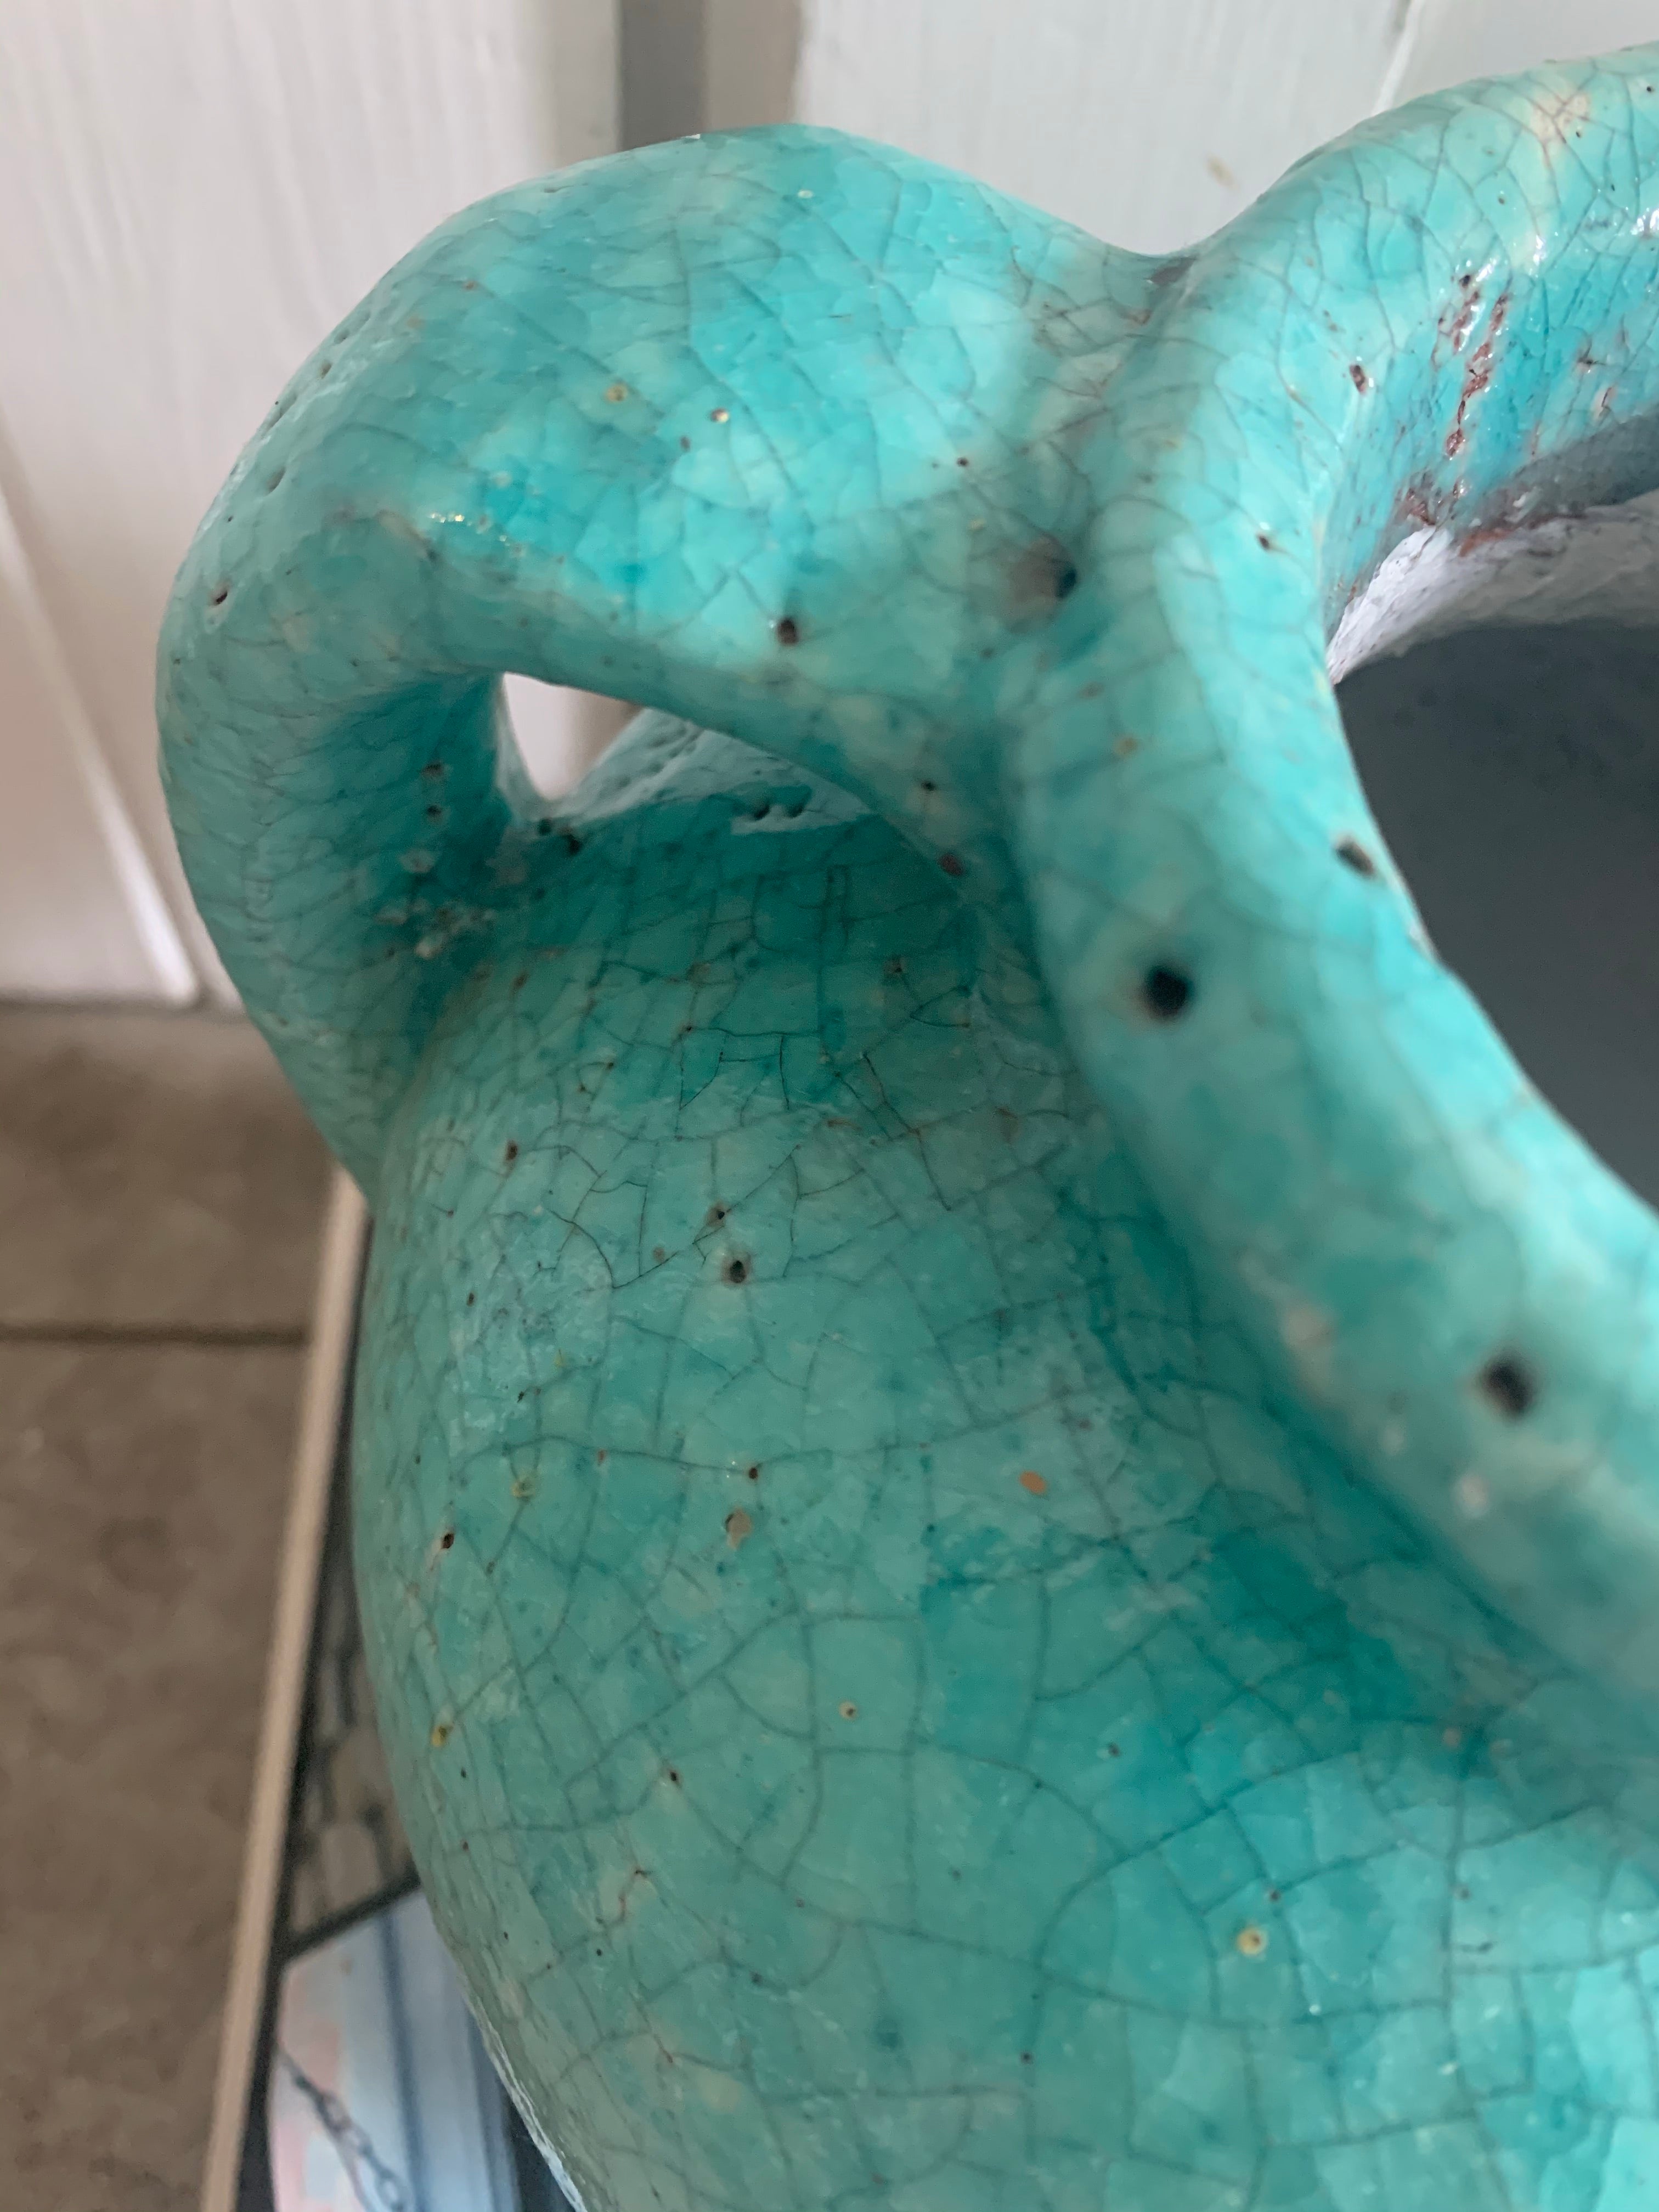 Textured Turquoise Vase